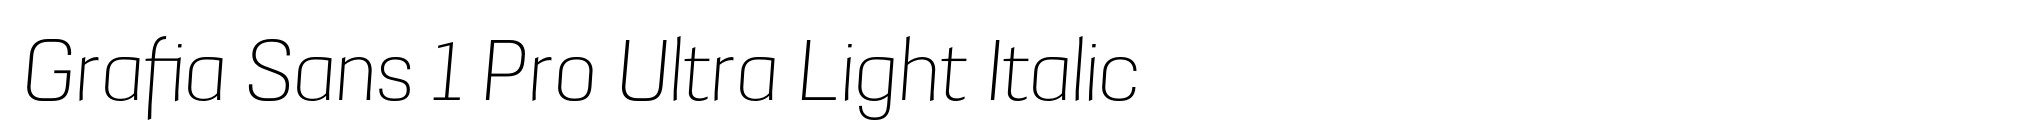 Grafia Sans 1 Pro Ultra Light Italic image